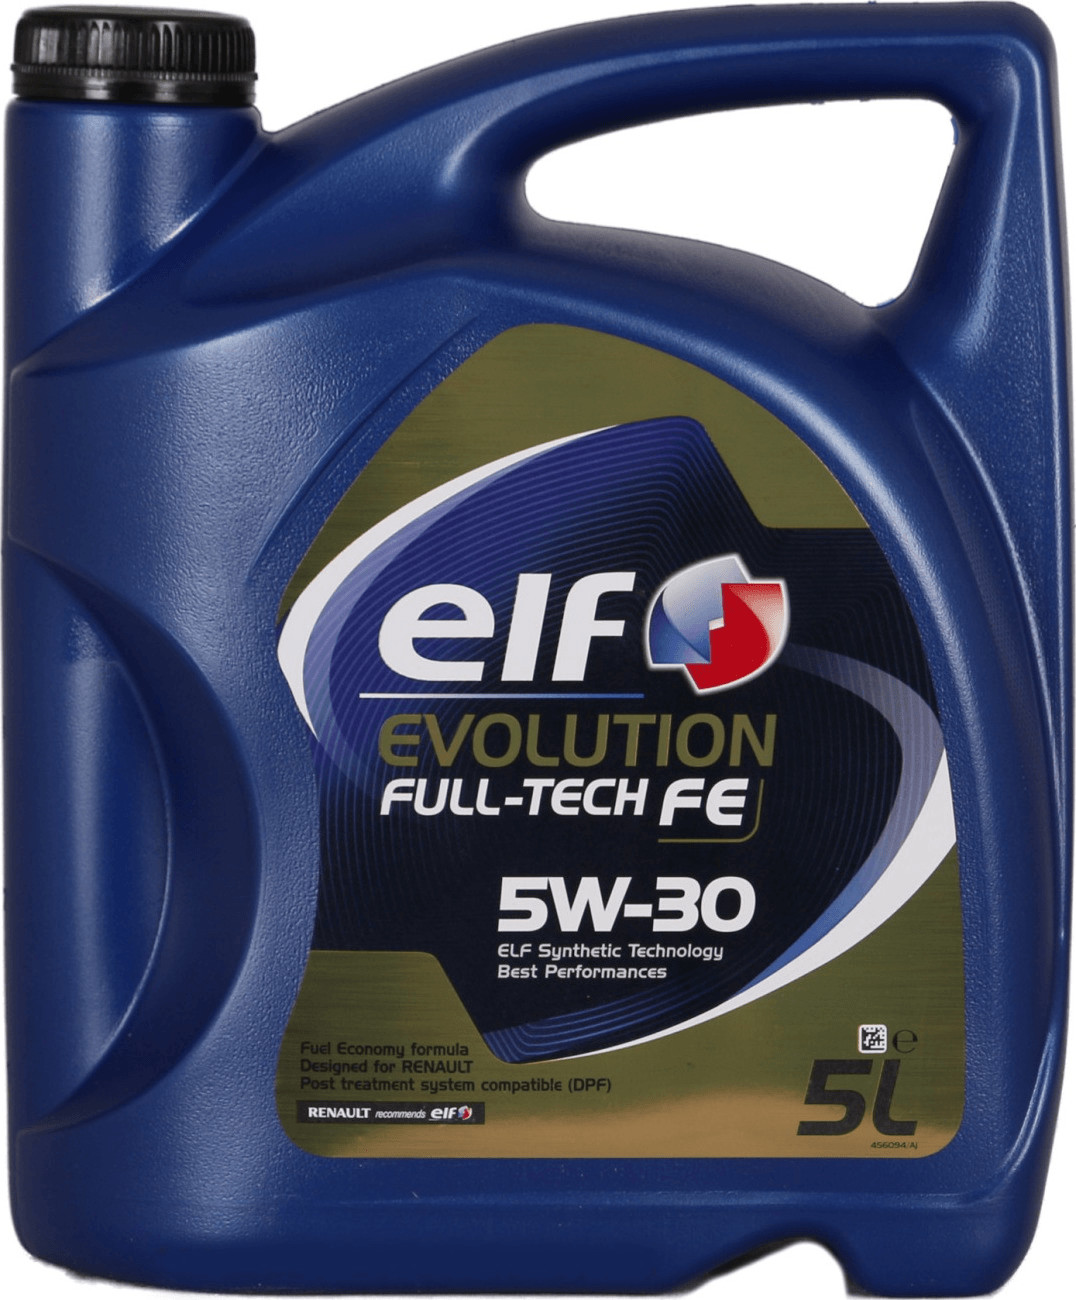 Buy Elf Evolution Full-Tech FE 5W-30 from £12.95 (Today) – Best Deals on